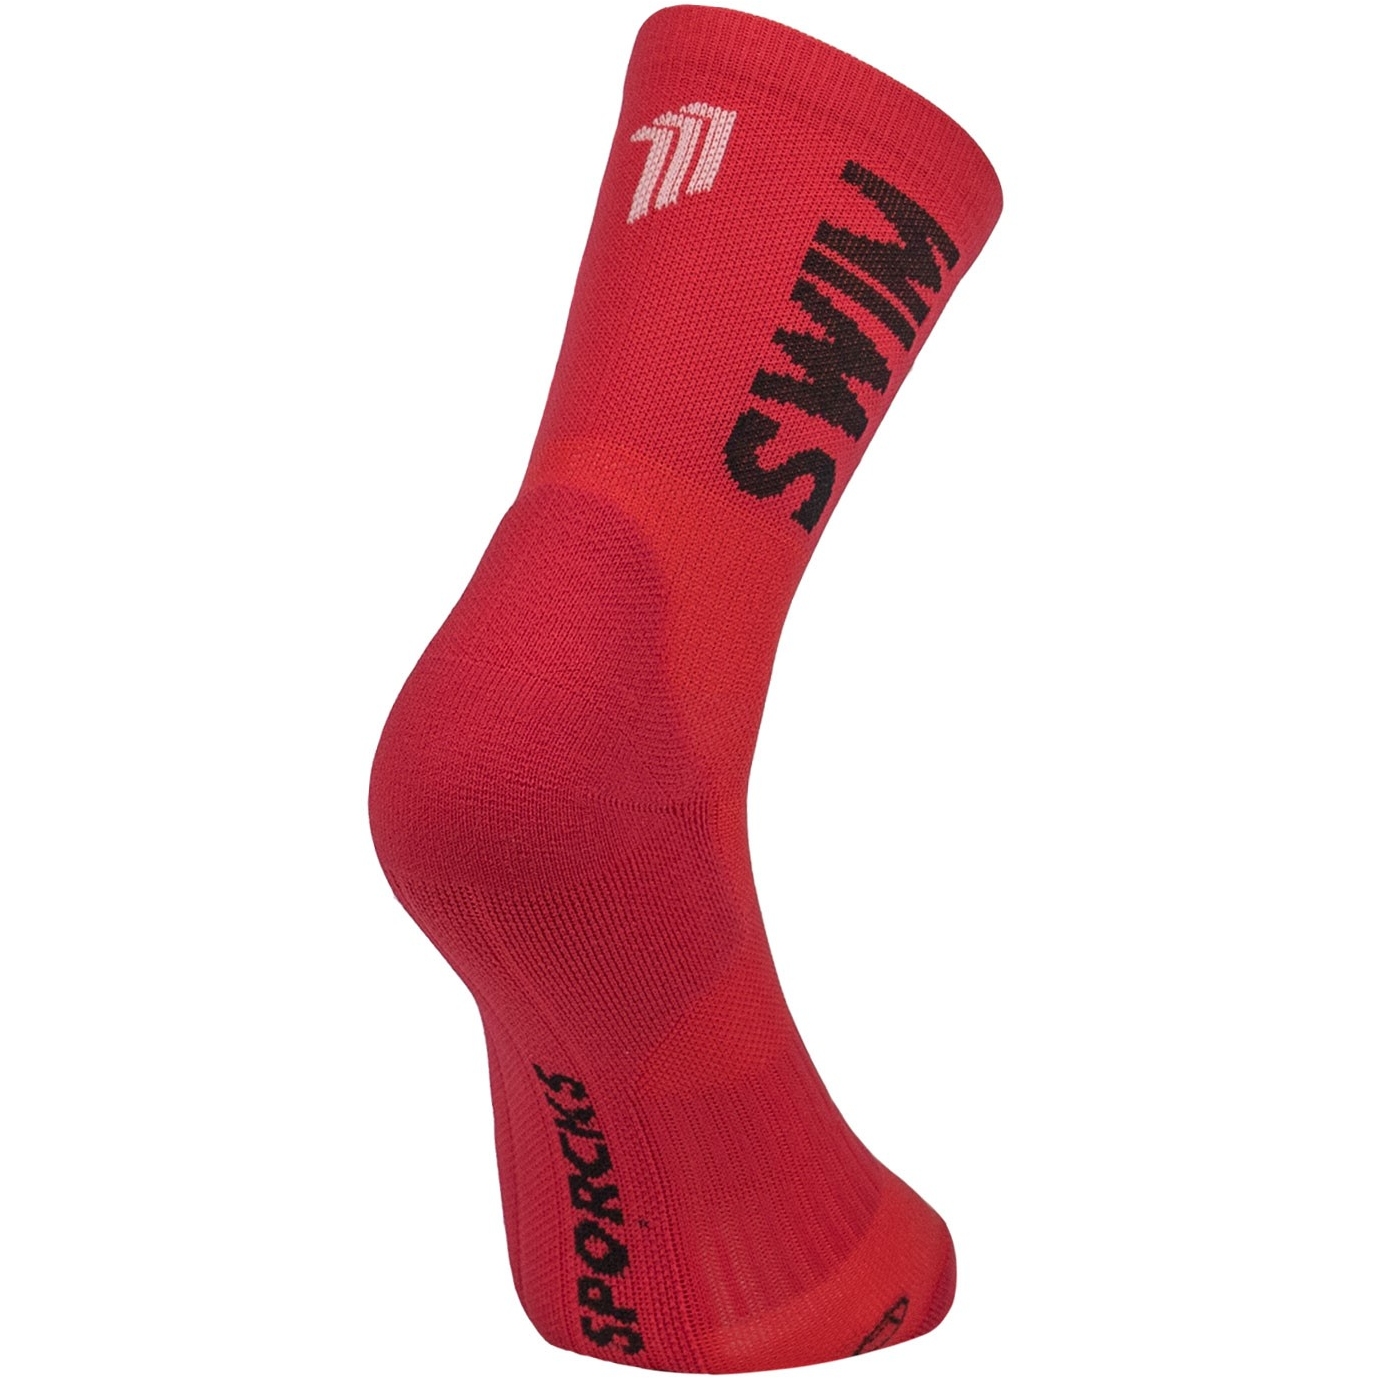 Productfoto van SPORCKS Triathlon Socks - SBR Red